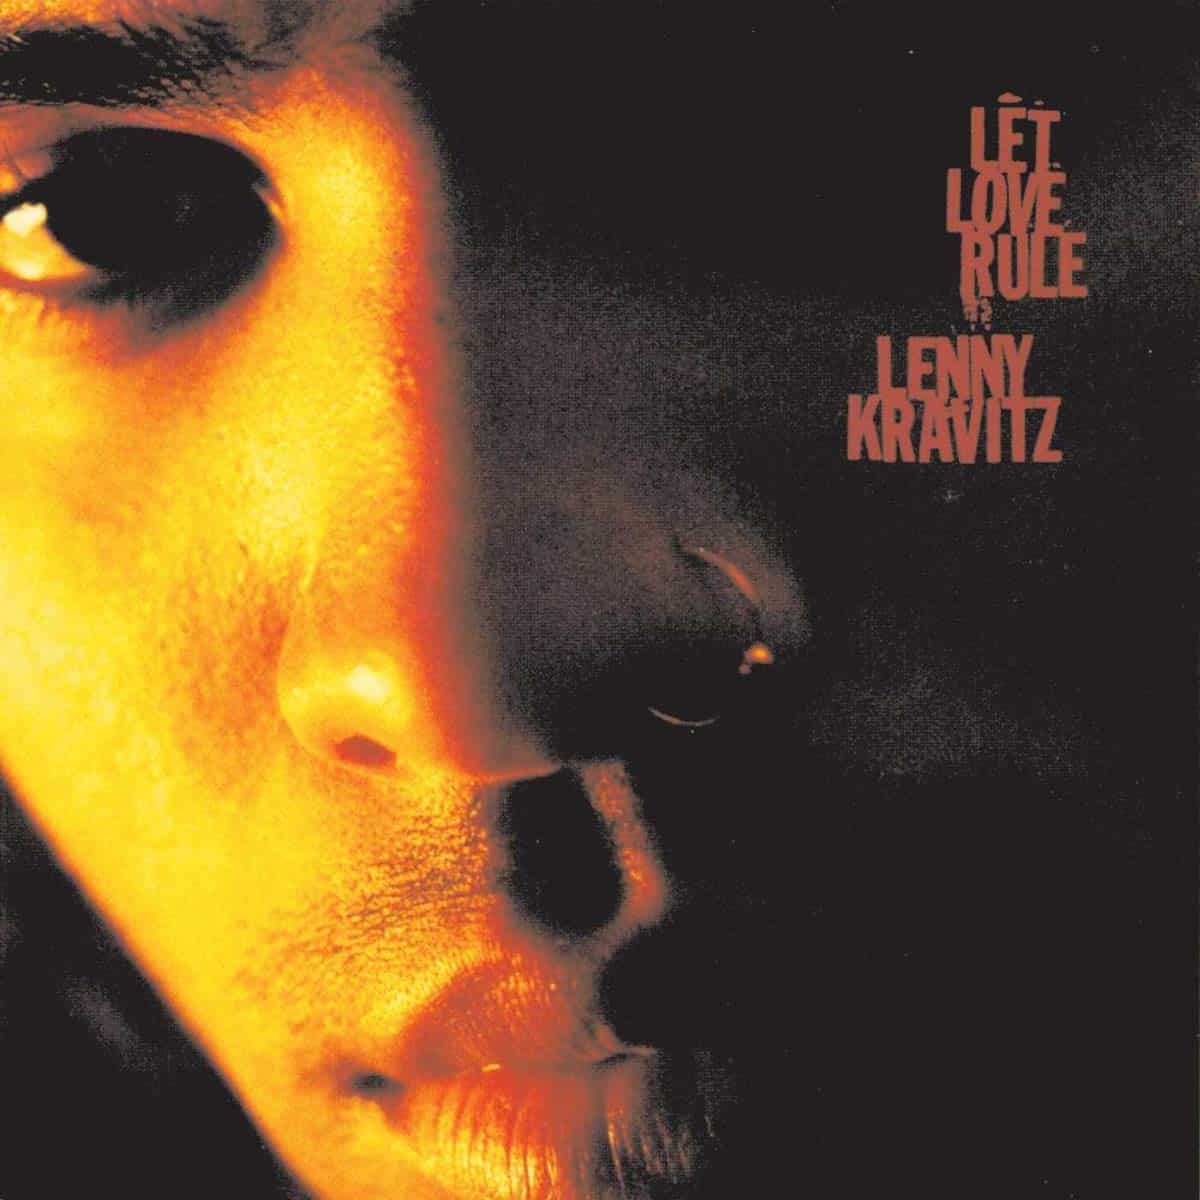 Lenny-Kravitz-Let-Love-Rule-vinyl-record-front